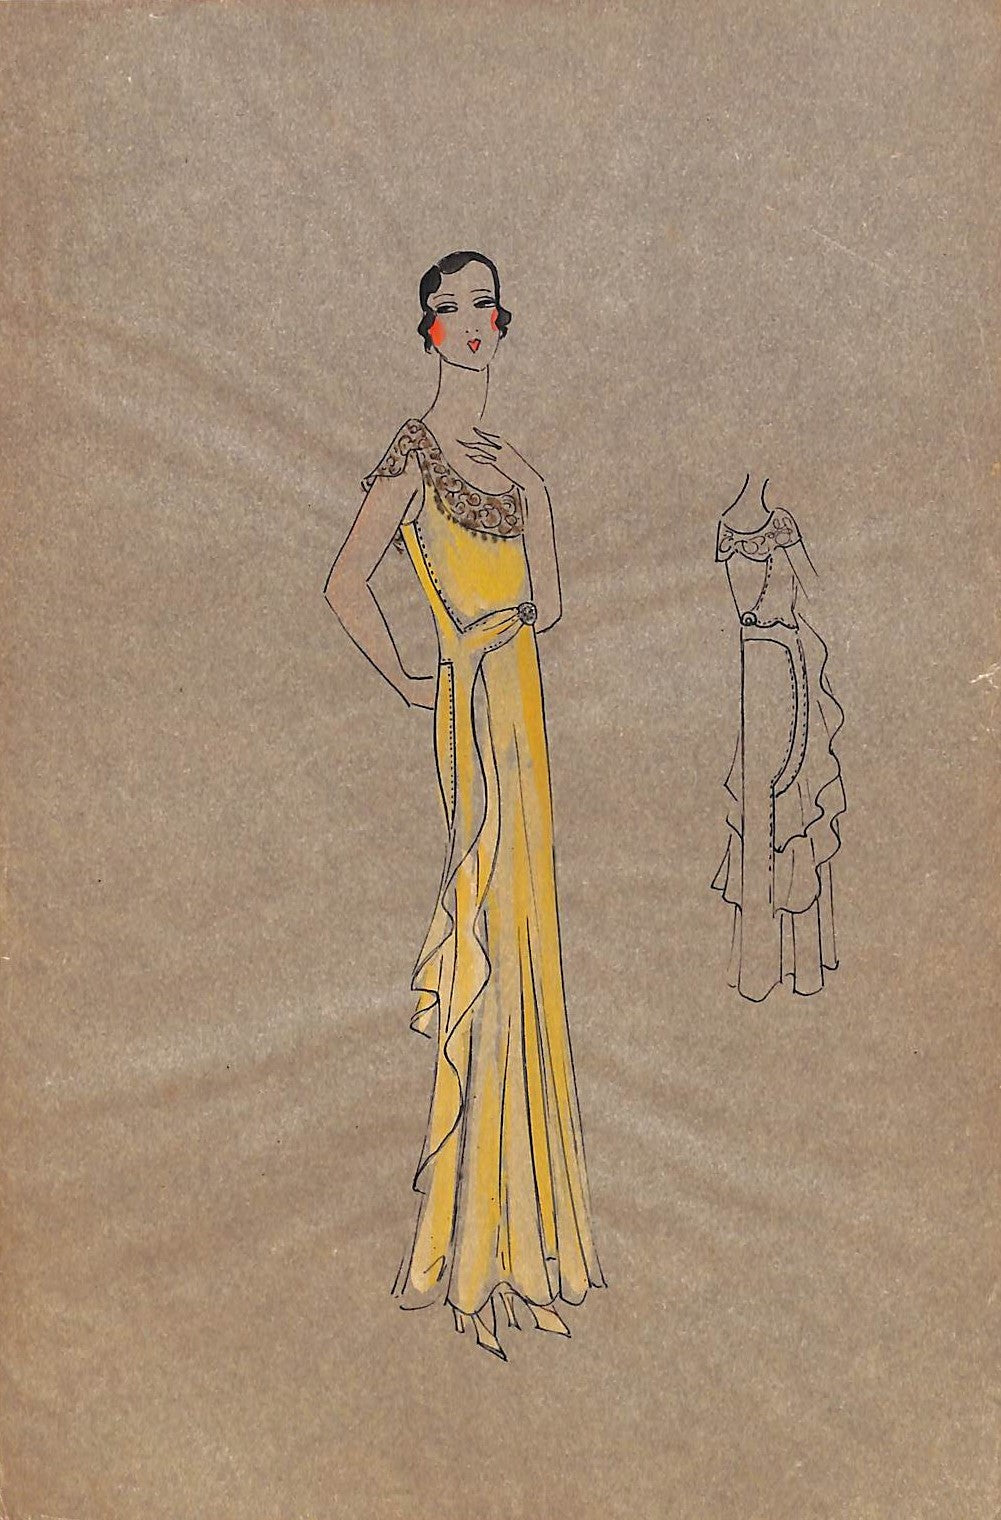 "Lanvin of Paris c1920s Original Fashion Illustration in Gouache" (SOLD)